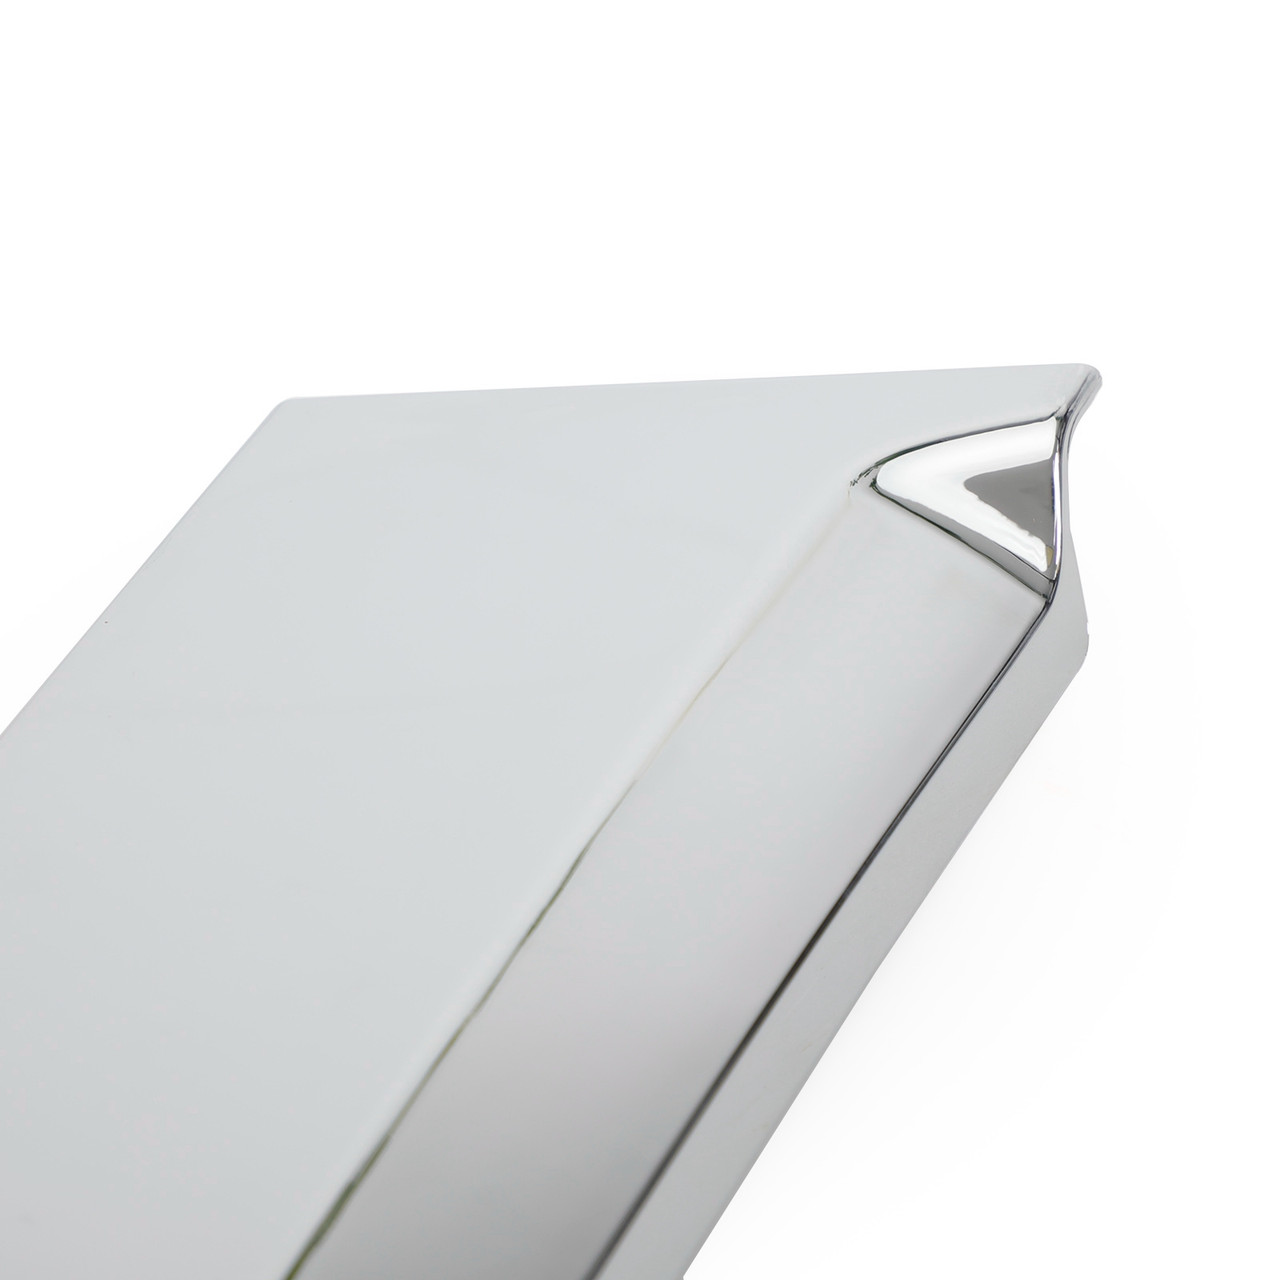 2x Chrome C Pillar Rear Door Garnish Cover Exterior Molding Trim For KIA Sportage 2011-2016